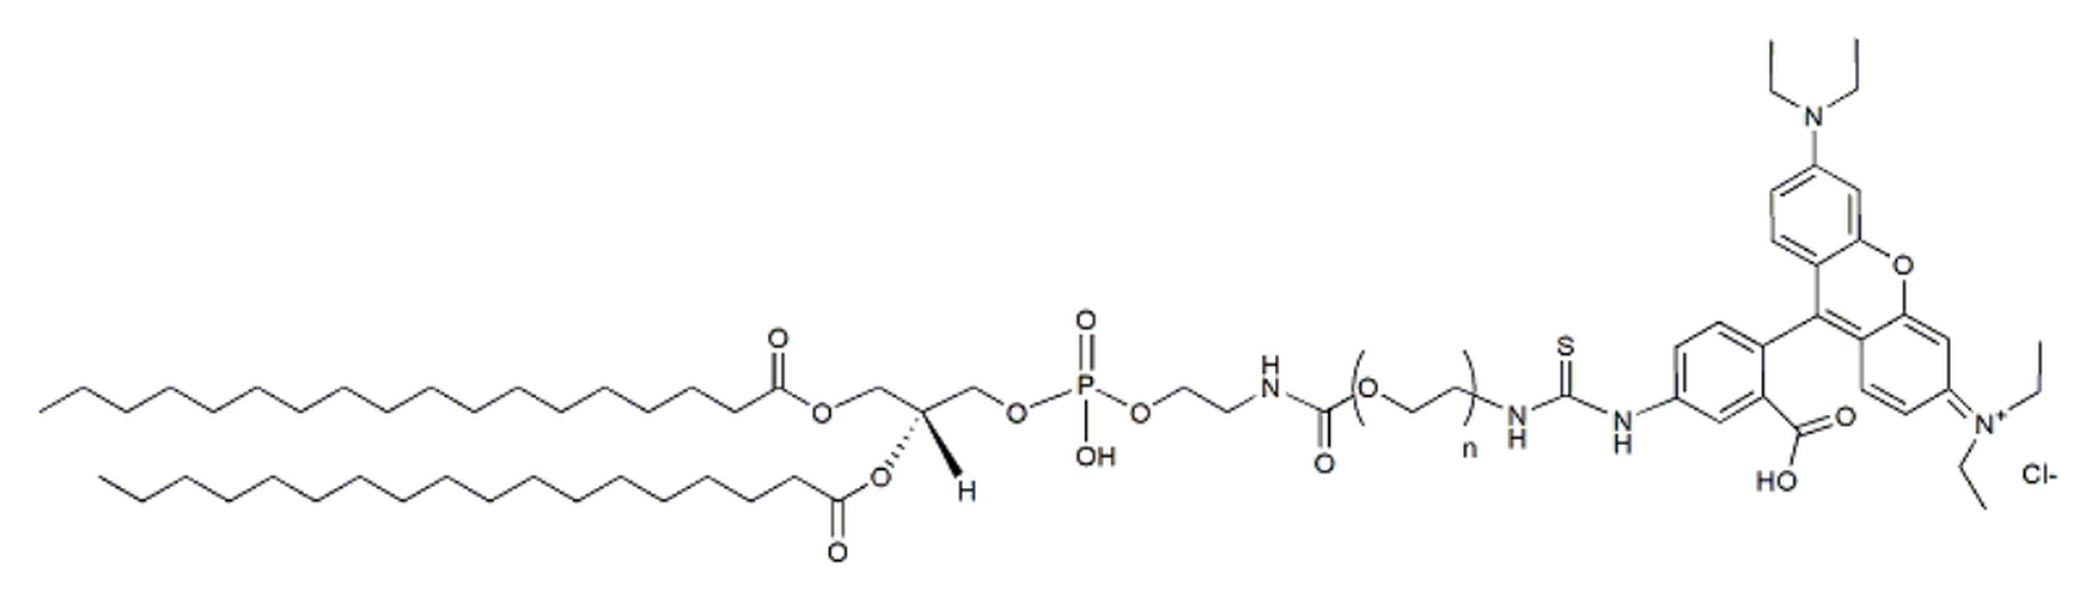 DSPE-PEG-Rhodamine, MW 2K